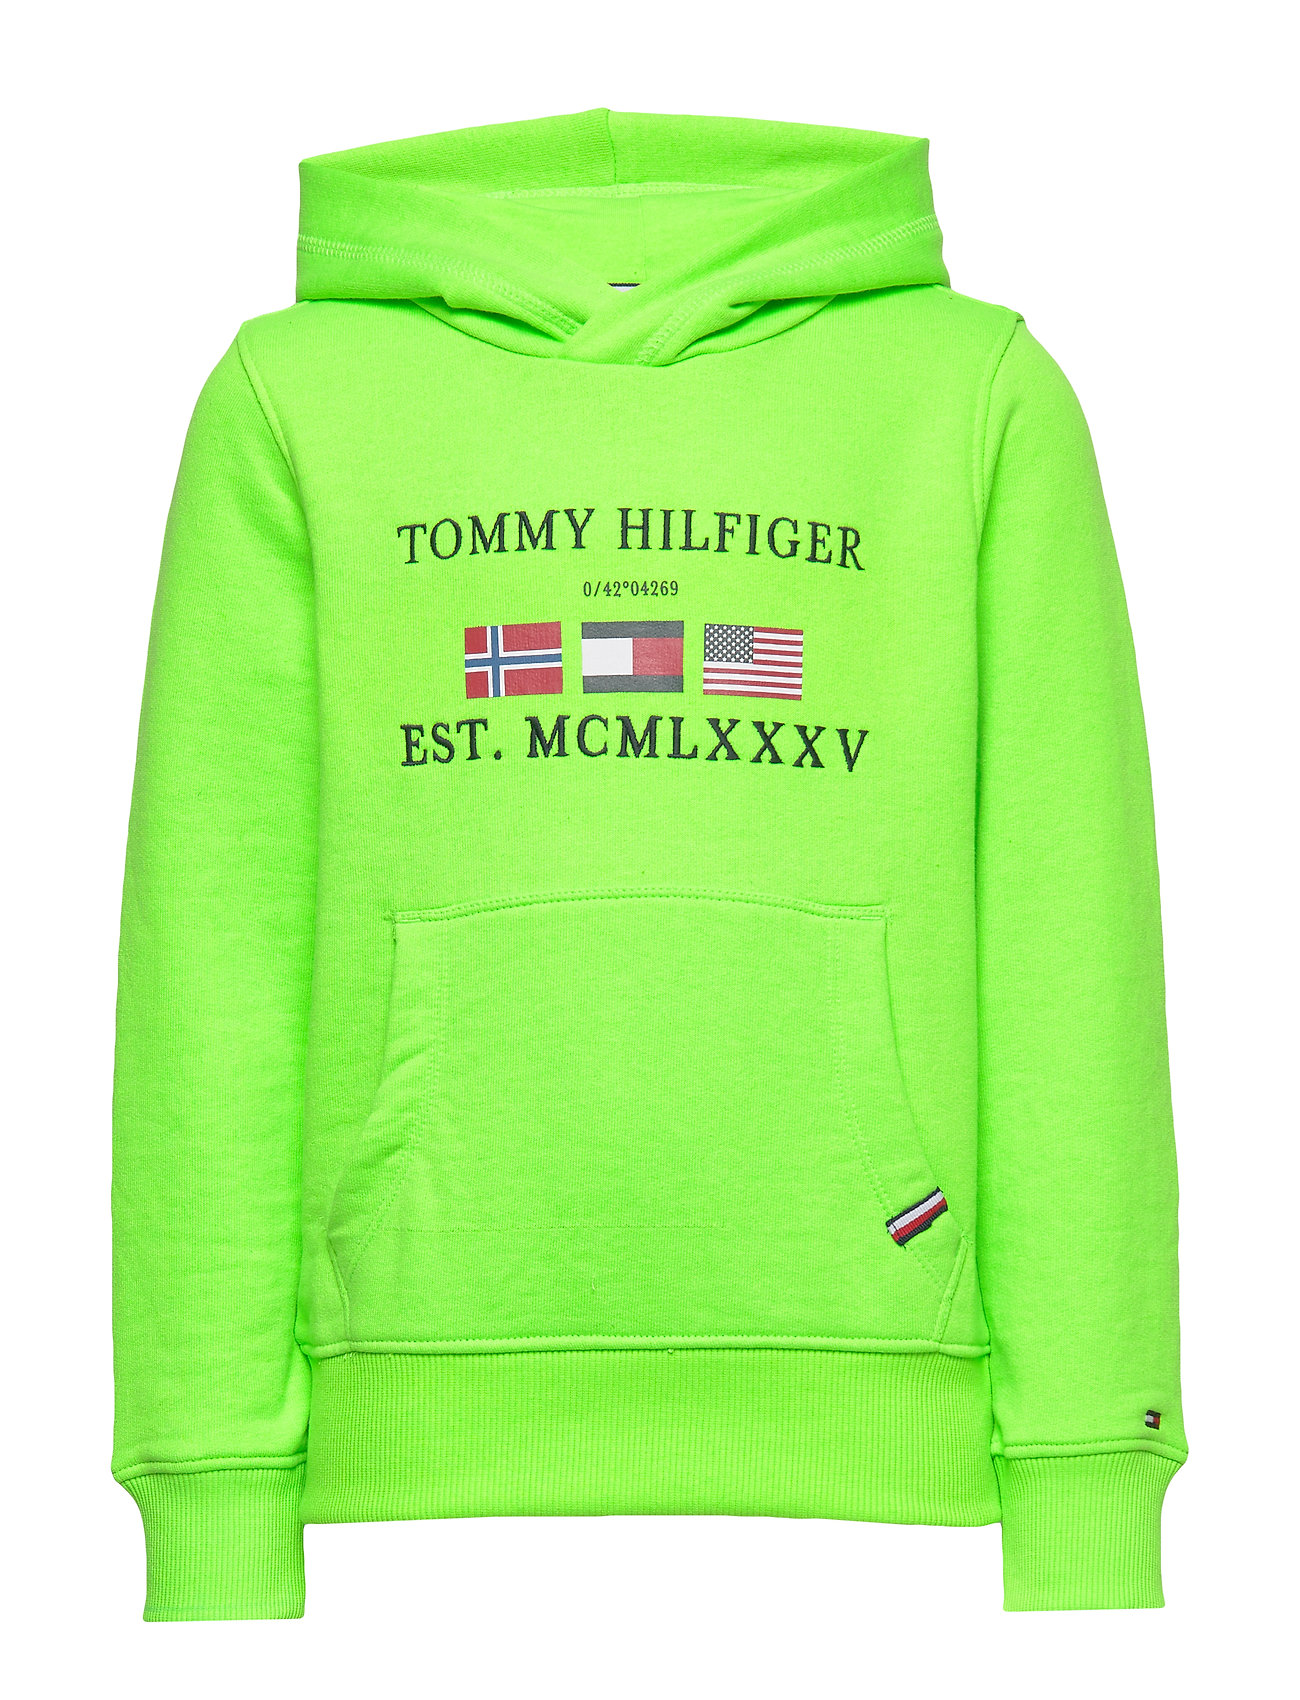 tommy hilfiger green